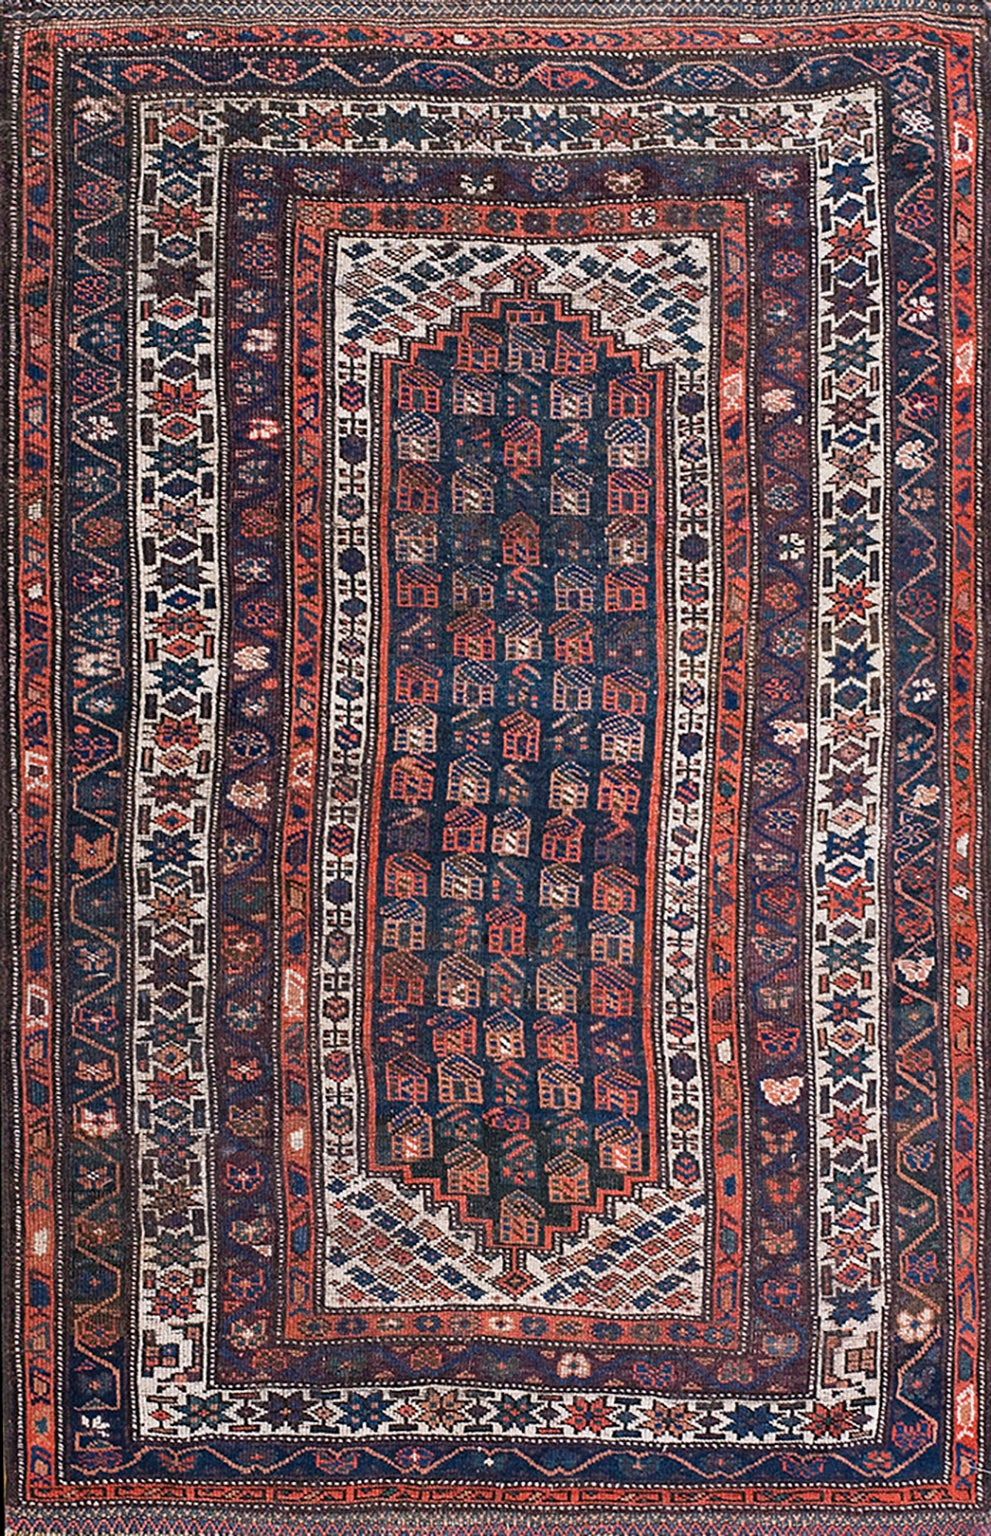 Early 20th Century W. Persian Kurdish Carpet ( 4'6" x 6'9" - 137 x 206 )